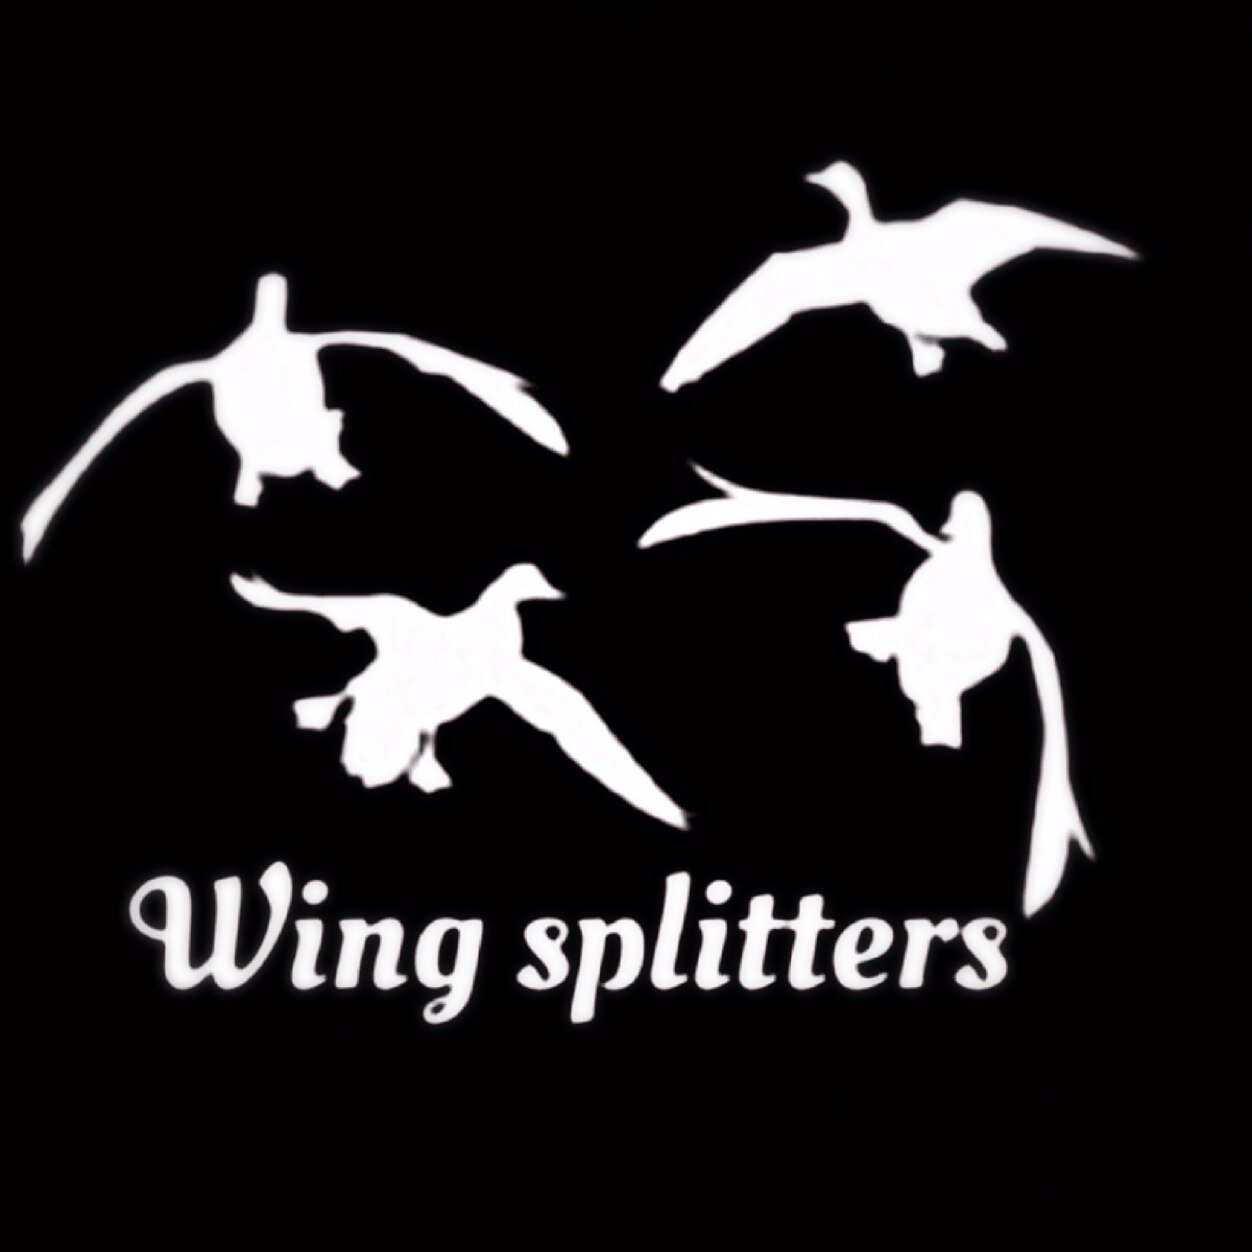 Just a group of guys havin fun and killen birds #wingsplitters #teamwingsplitters